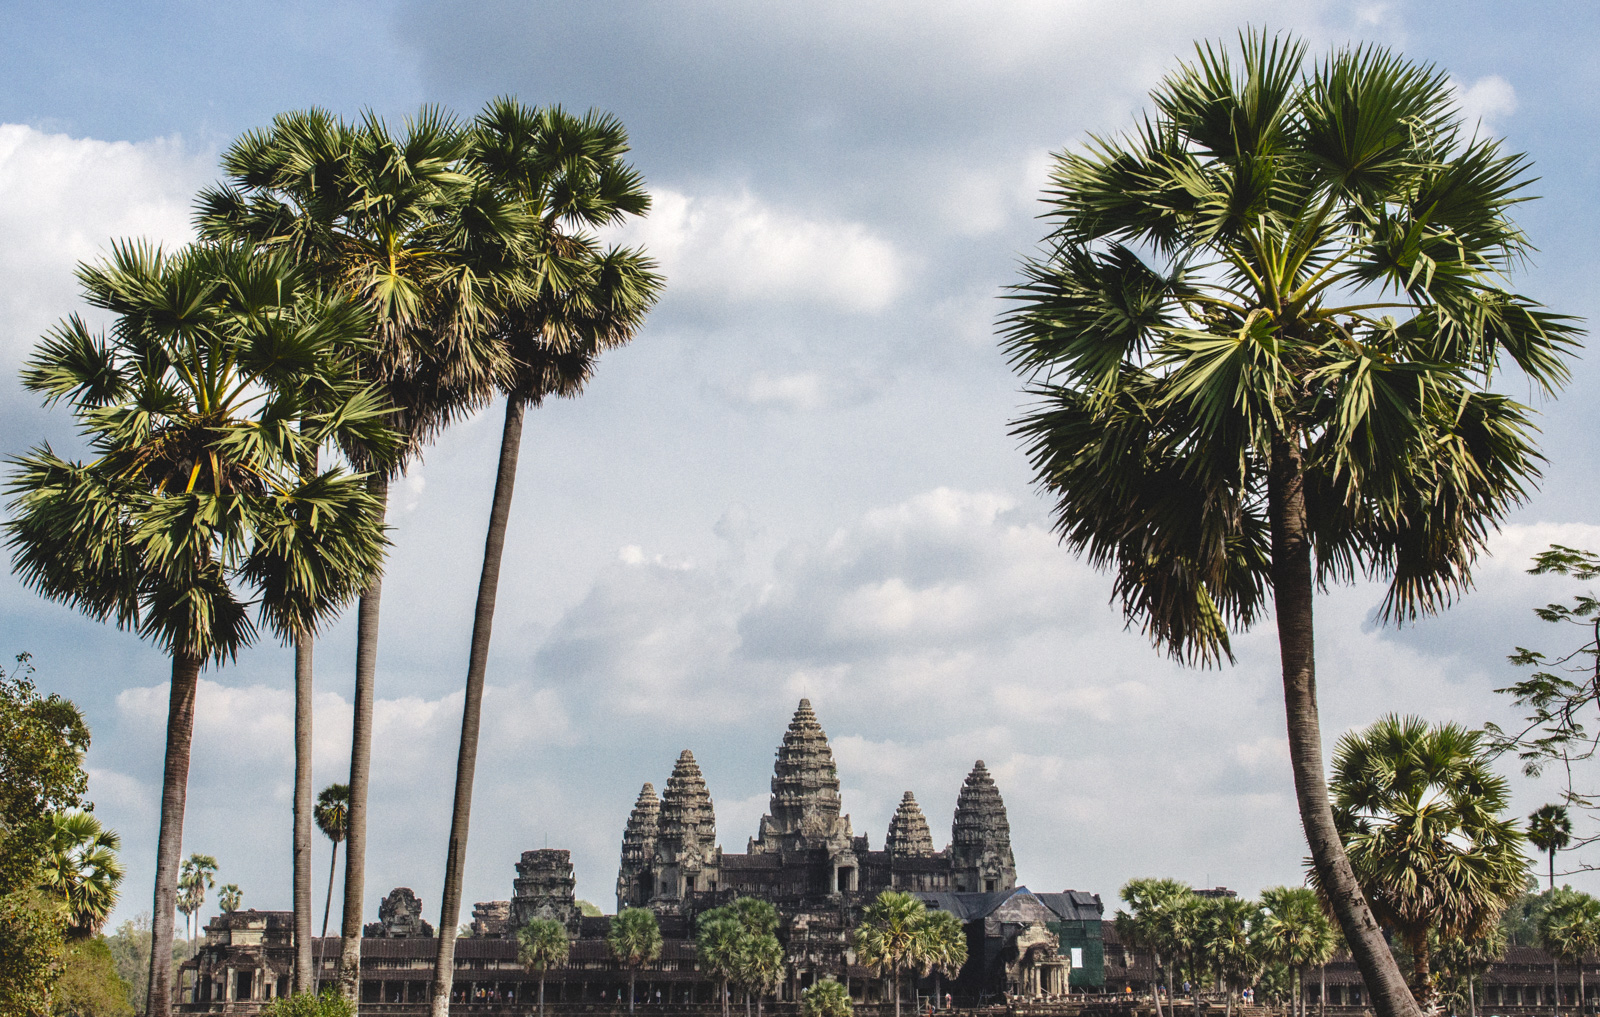 AngkorTemples-SiemReap-Cambodia-AmyRolloPhoto-2-158-Edit-2-Edit.jpg